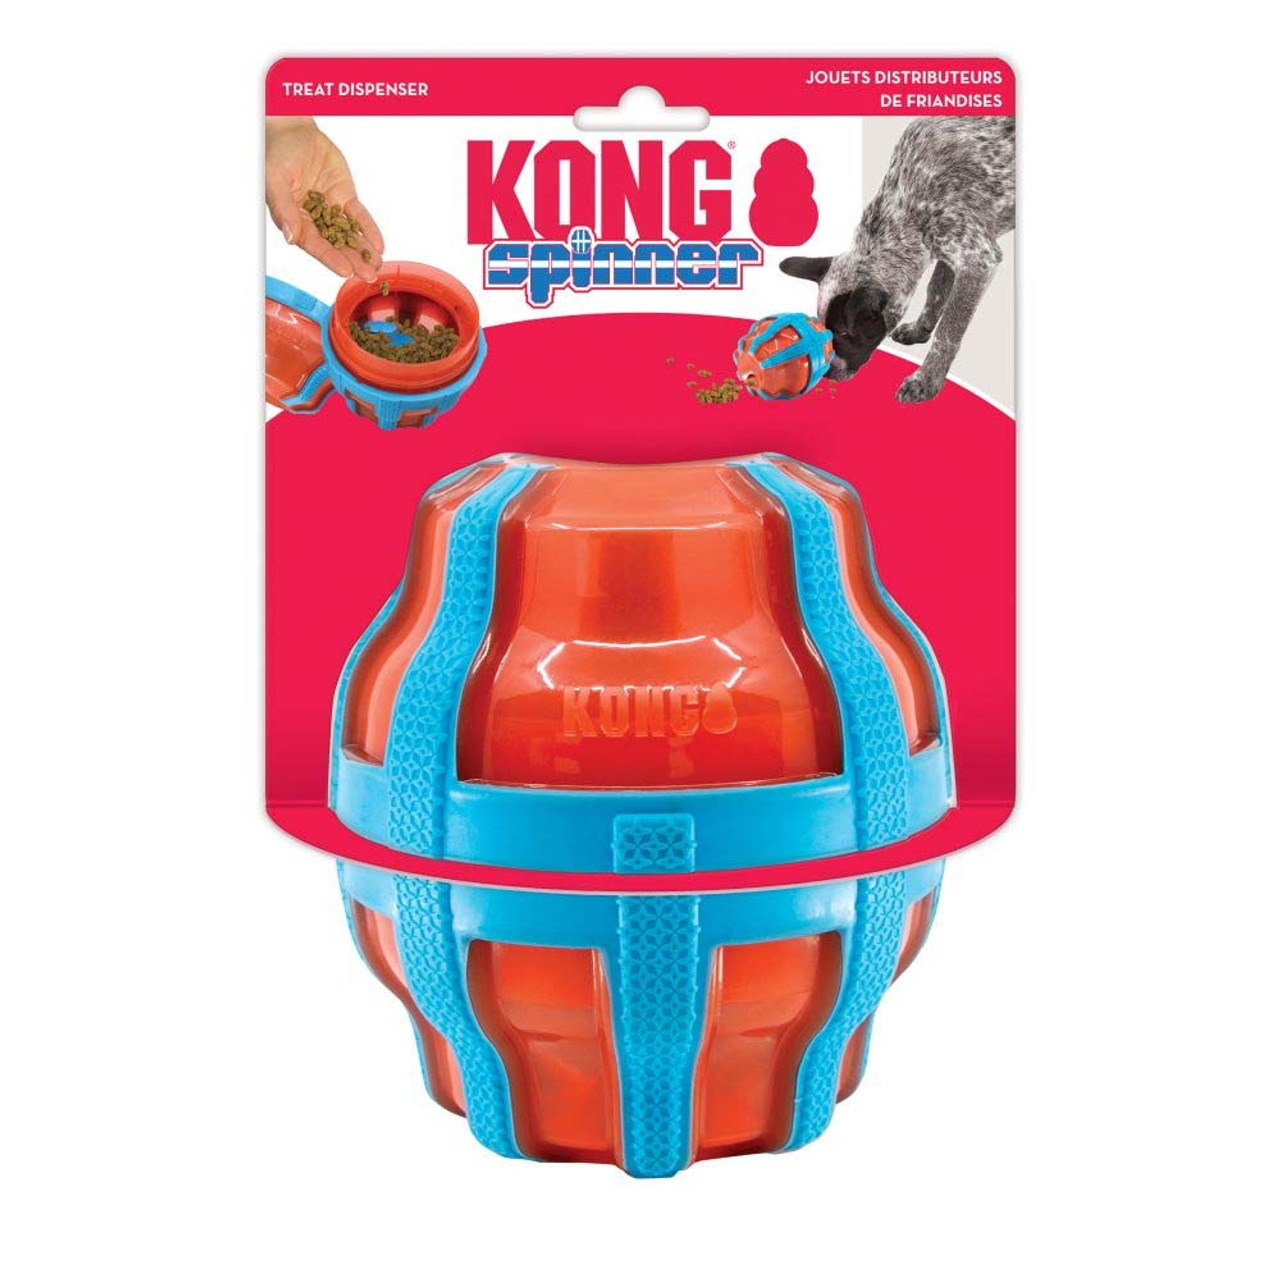 KONG Gyro Dog Treat Dispenser Toy